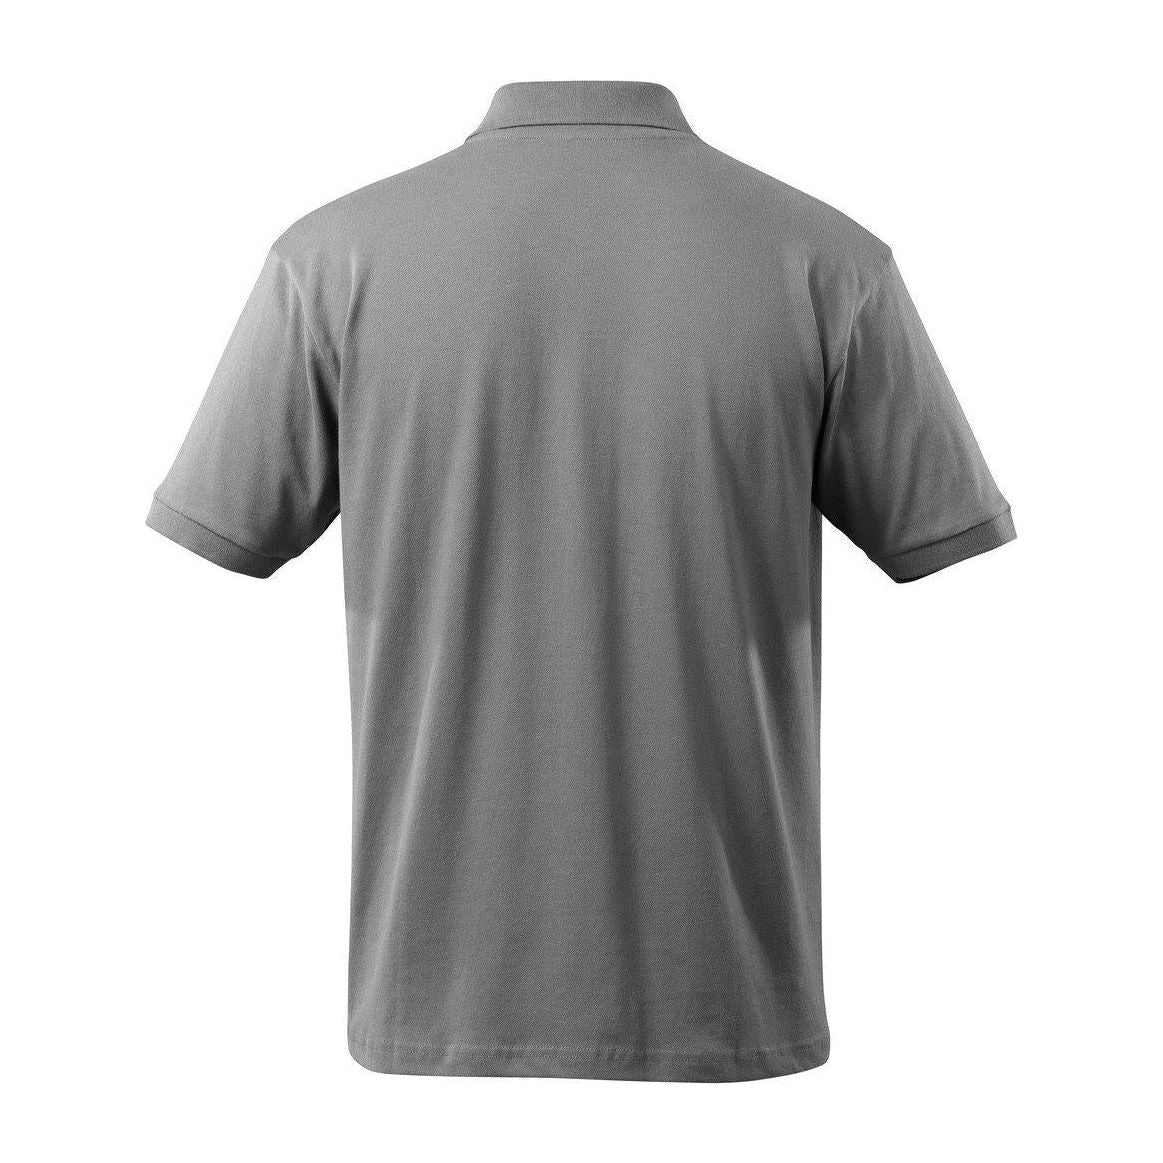 Mascot Bandol Polo shirt Anthracite Grey 51587-969-888 Front